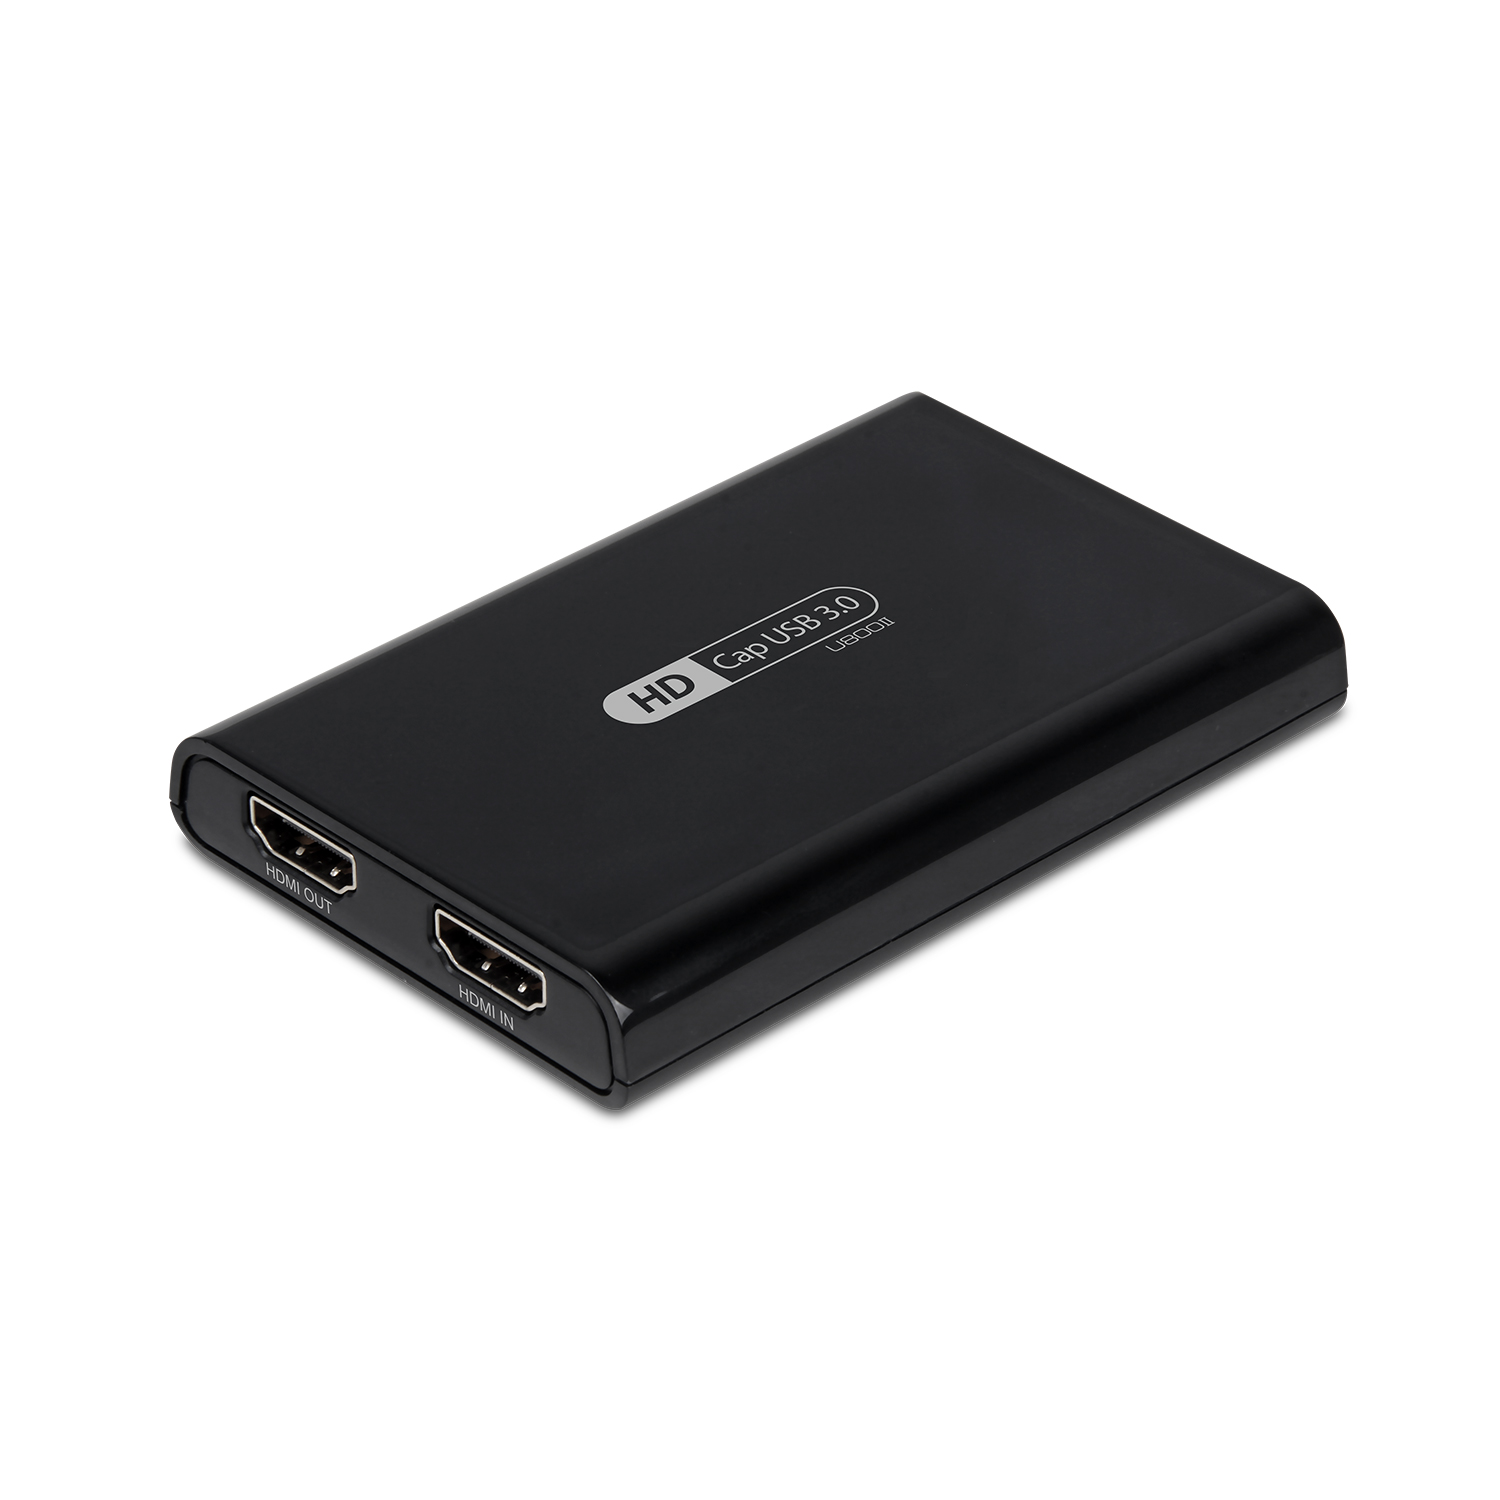 4K HDMI to USB 3.0 Capture Card (U1000/U800-II)